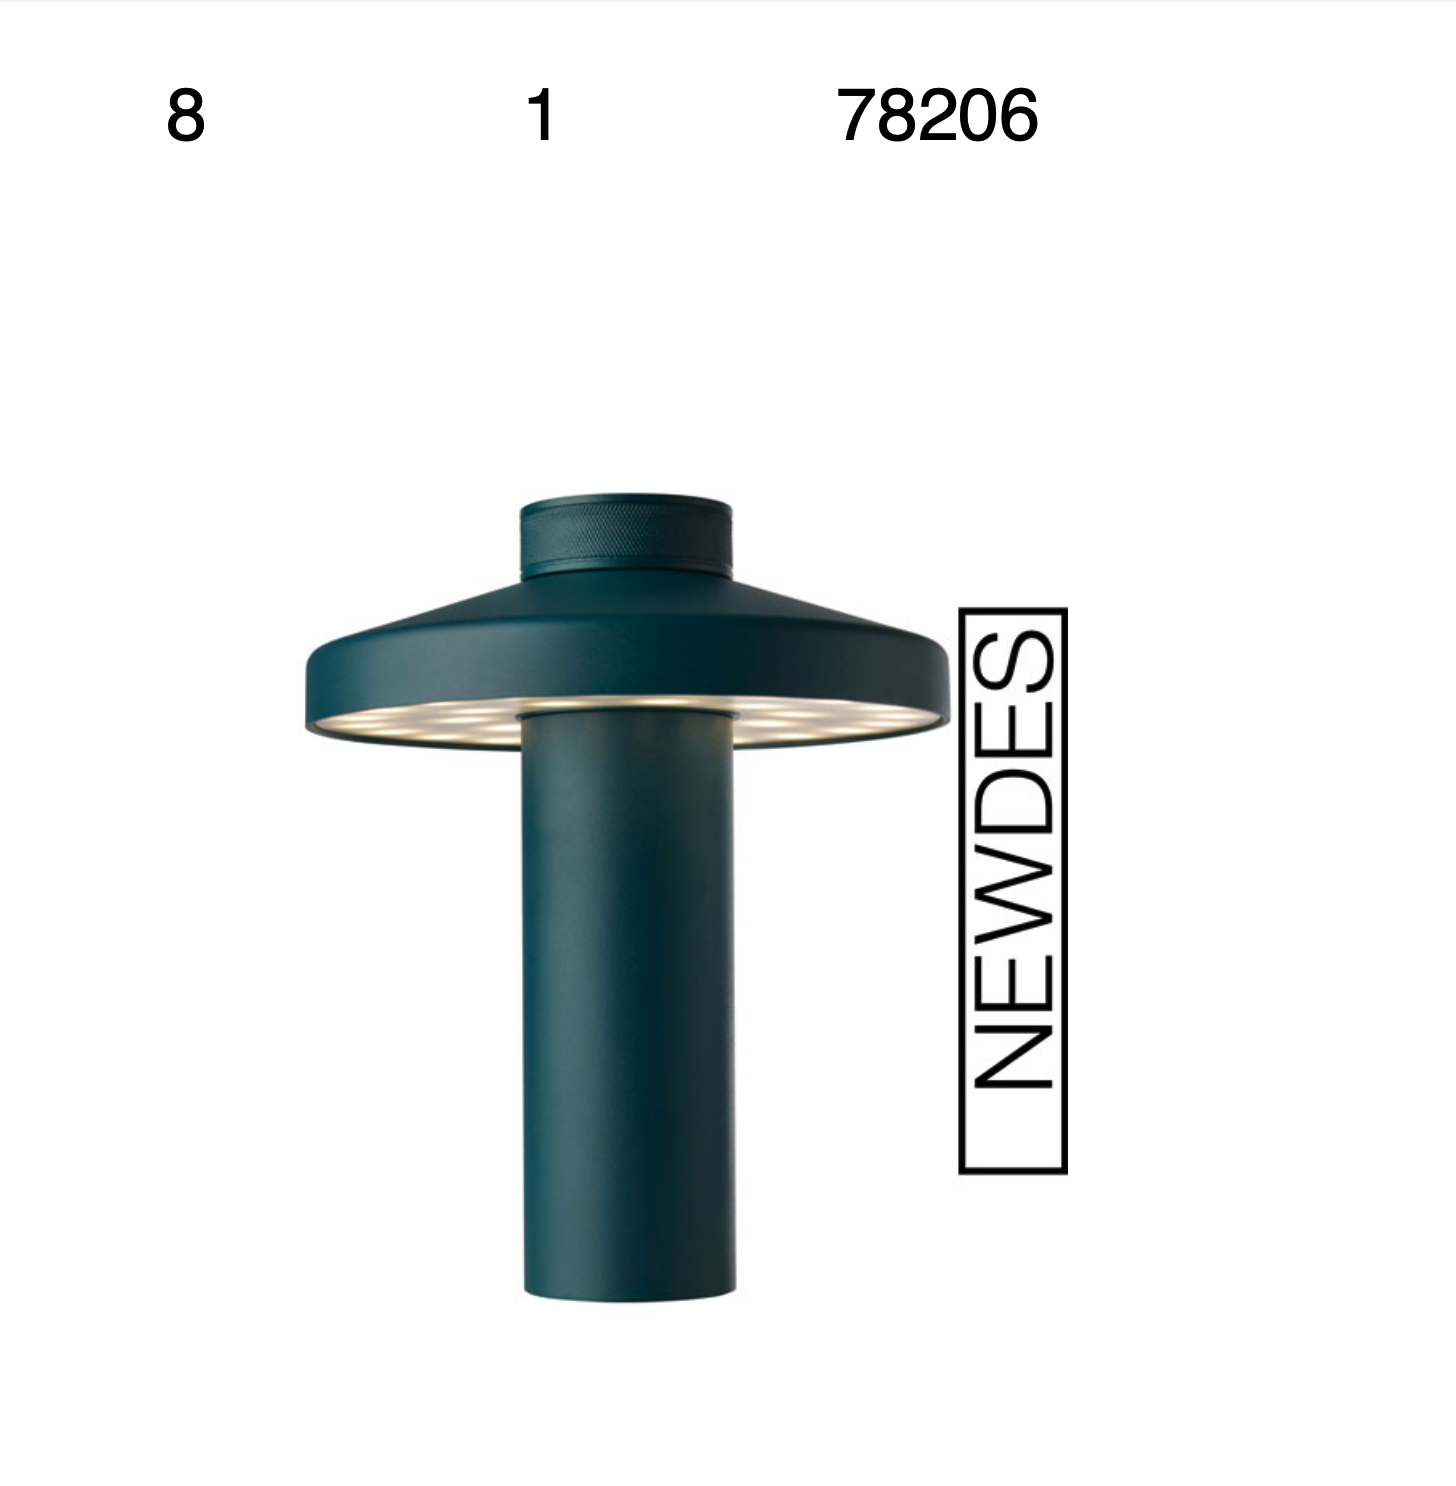 Newdes Turn LED buiten tafellamp (by Sompex)| oplaadbaar (accu) | Aluminium | Dimbaar | blauw | waterdicht IP54